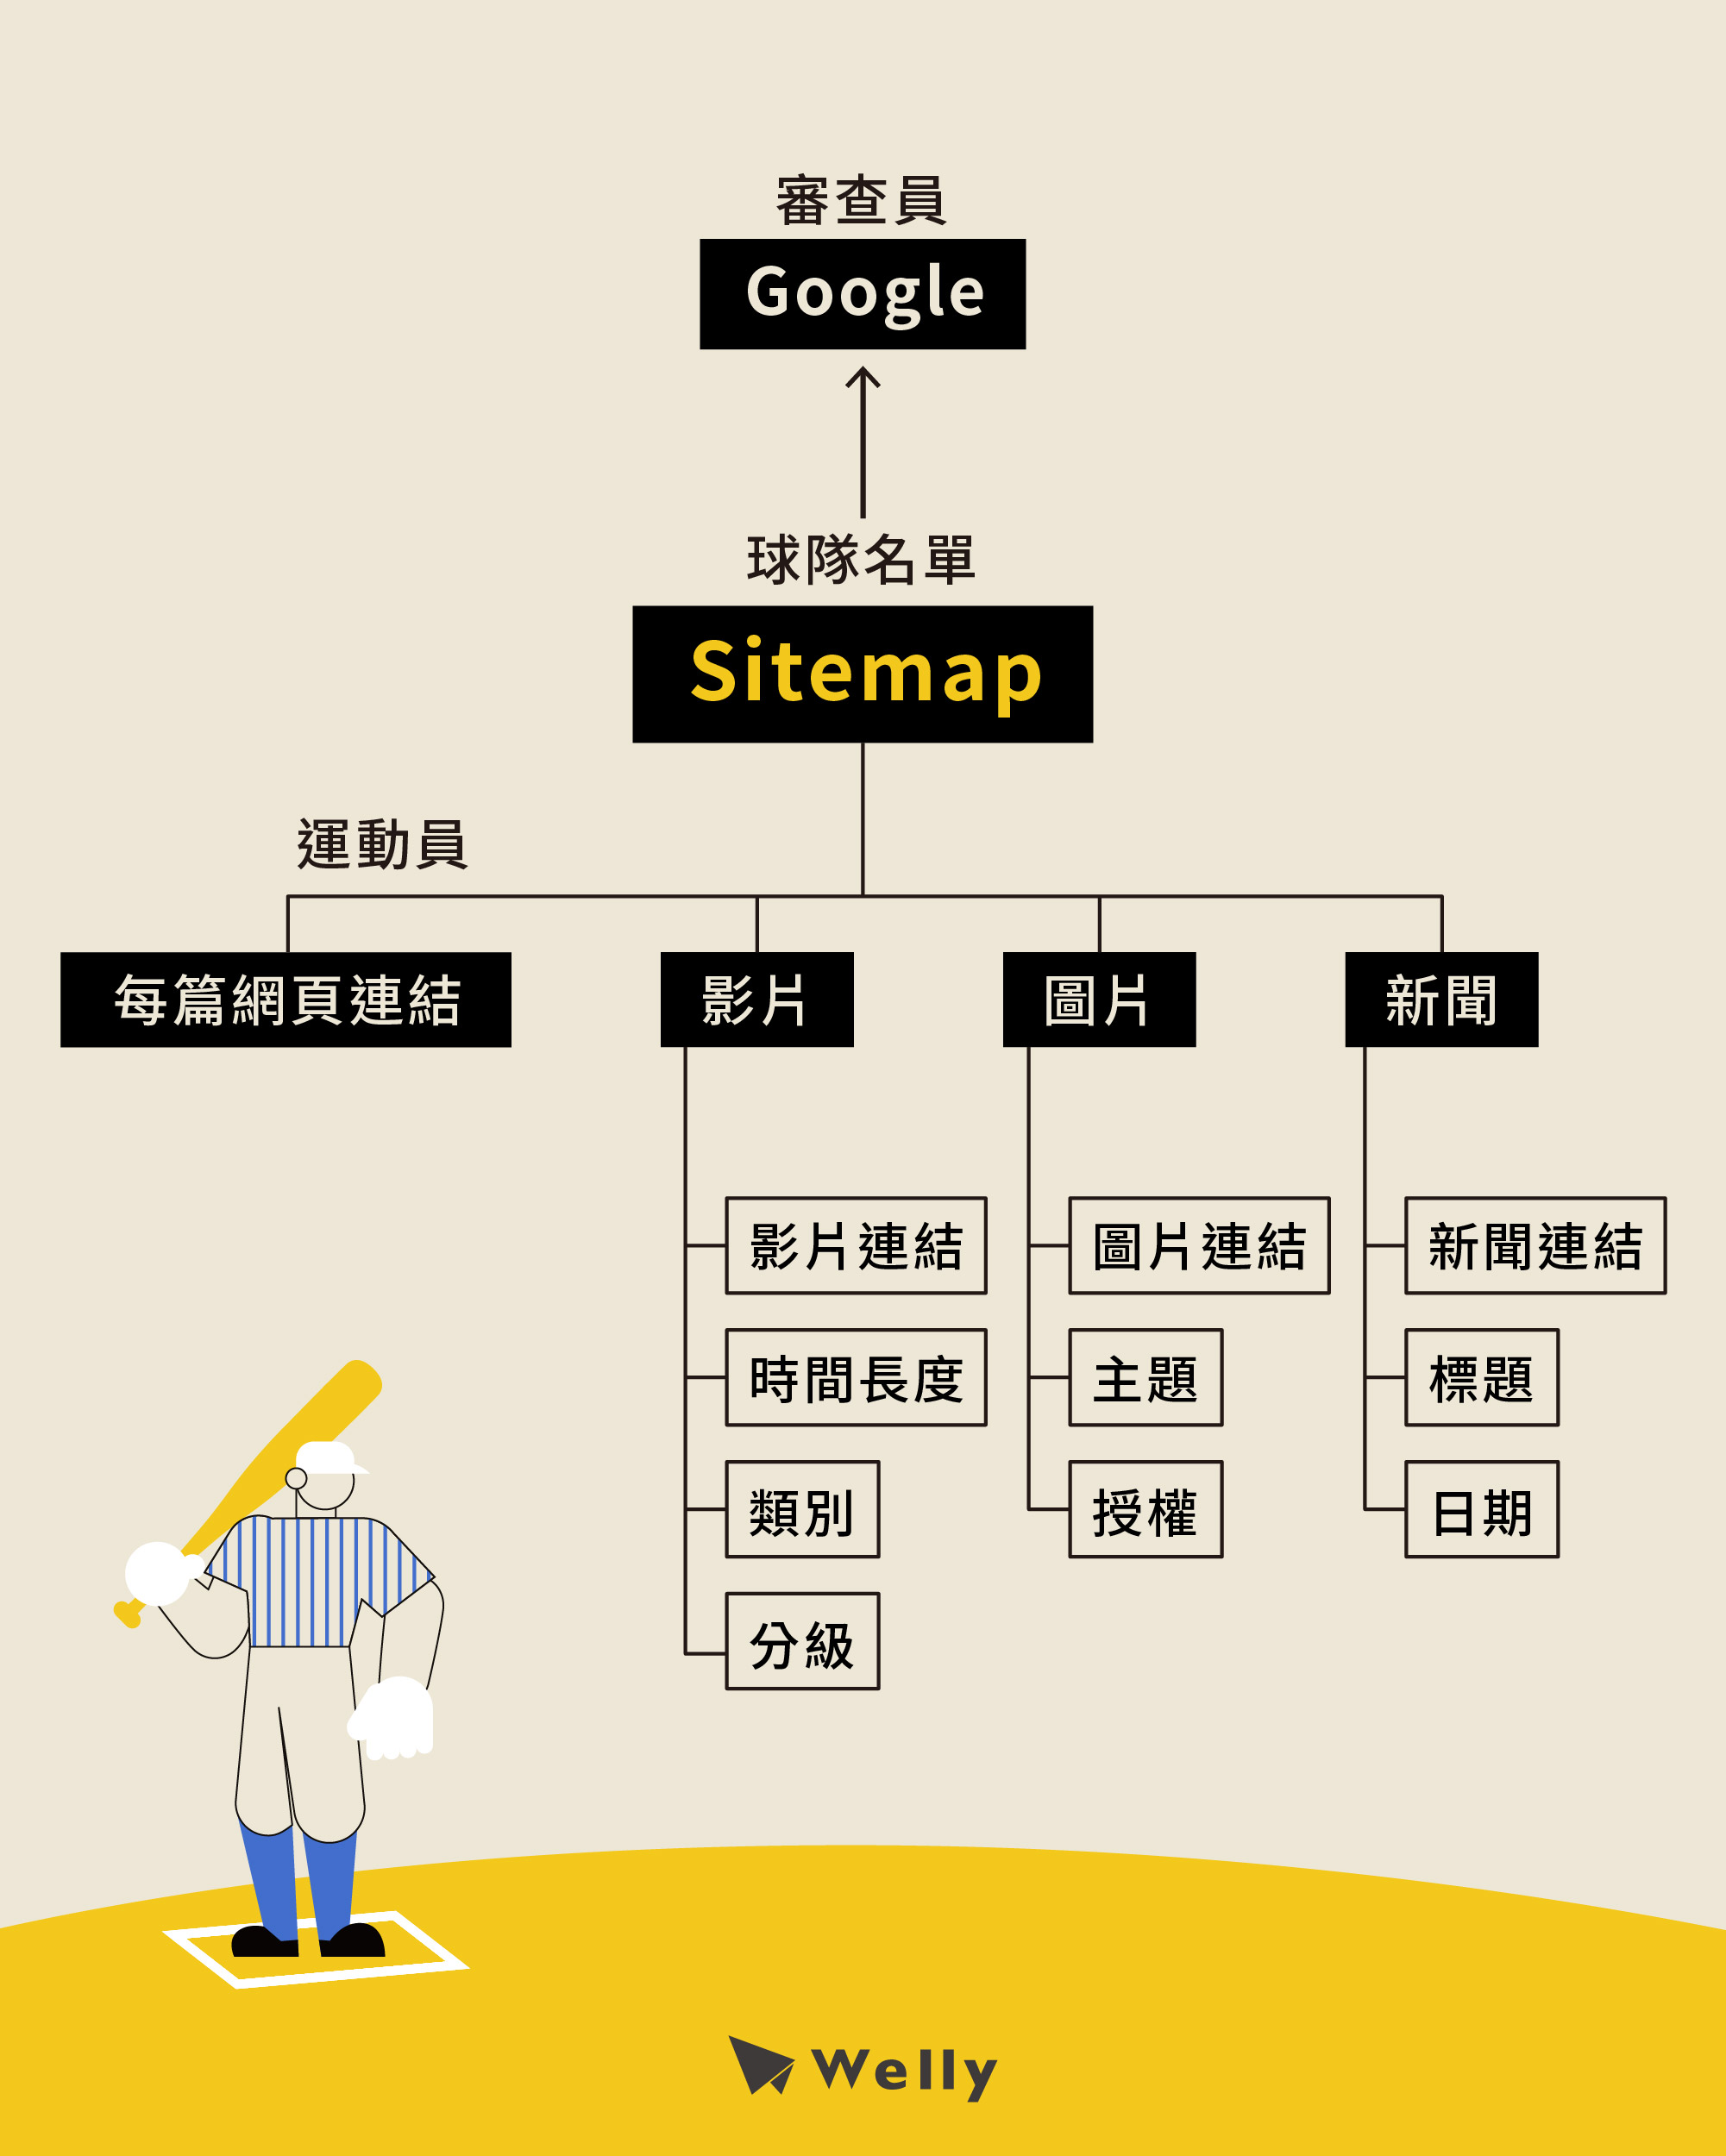  Sitemap是什麼